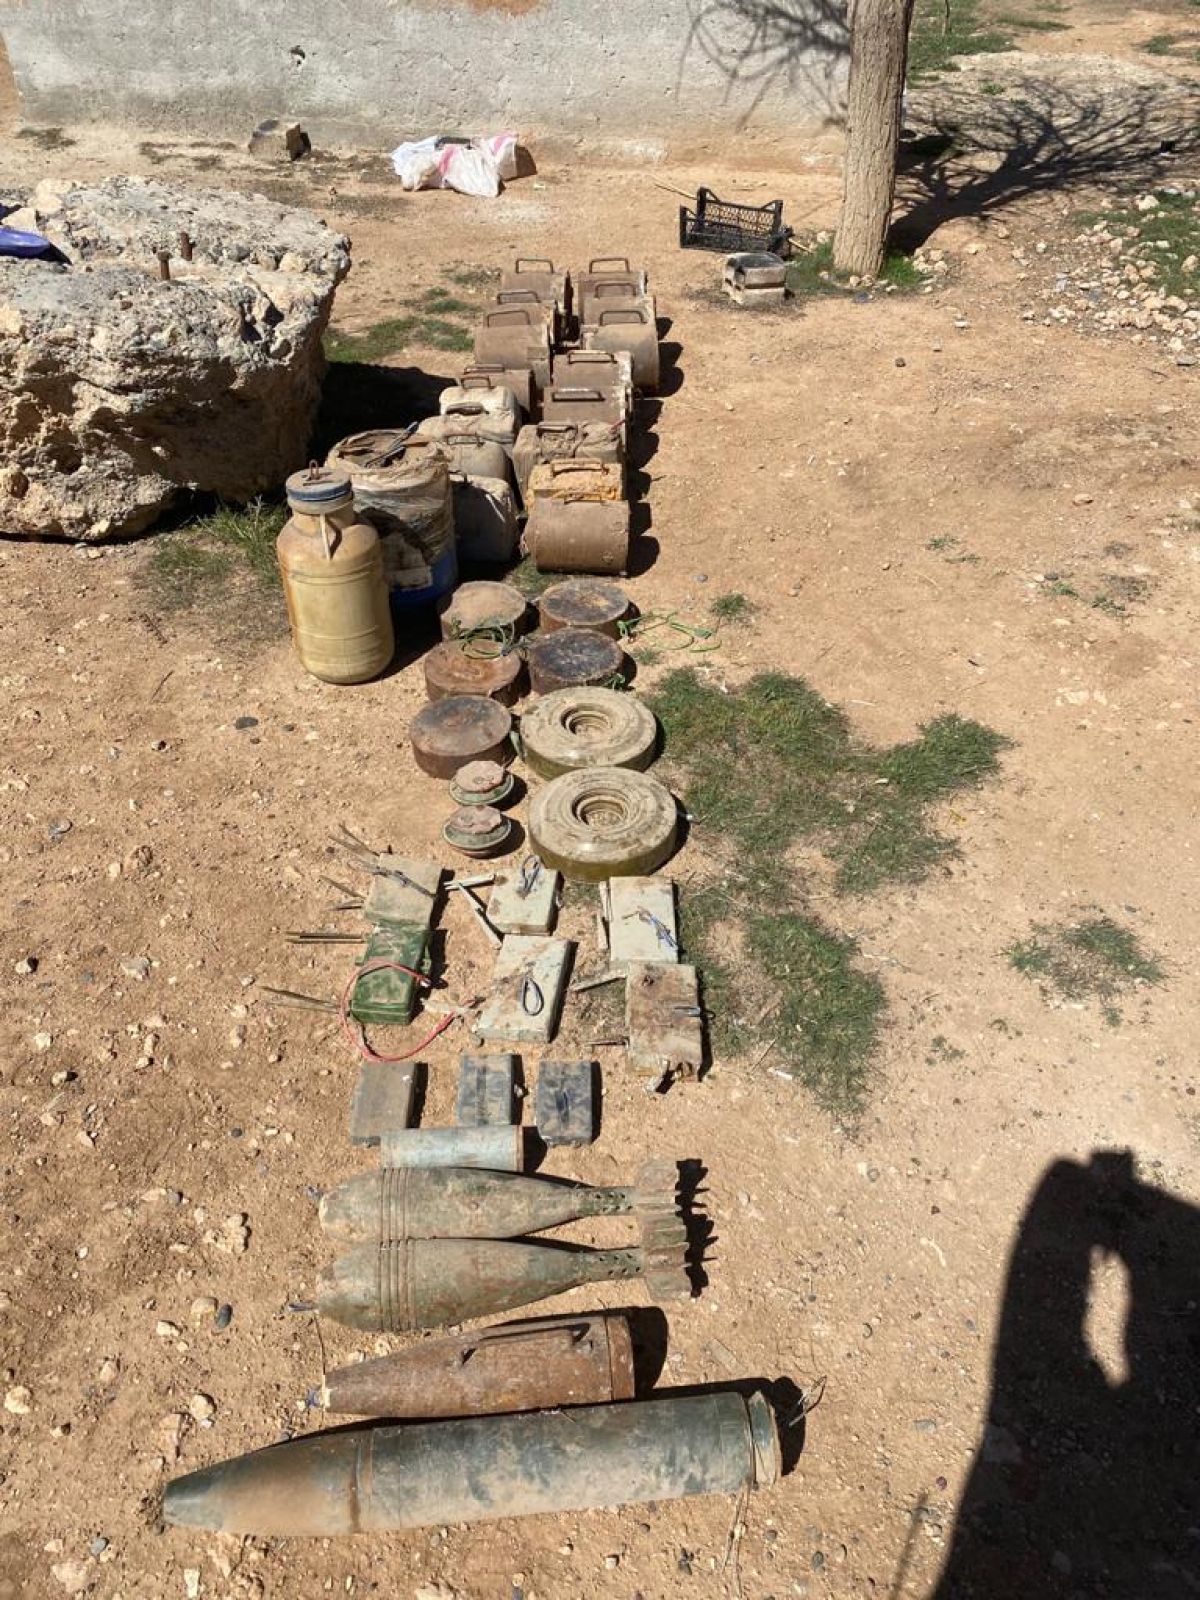 693 kilograms of explosives found in Tel Abyad #7